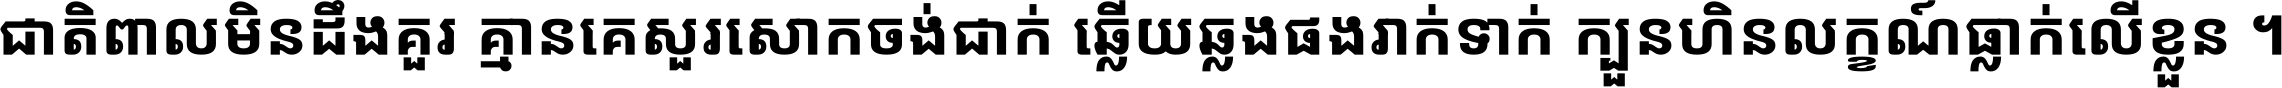 Noto Sans Khmer UI SemiCondensed Bold